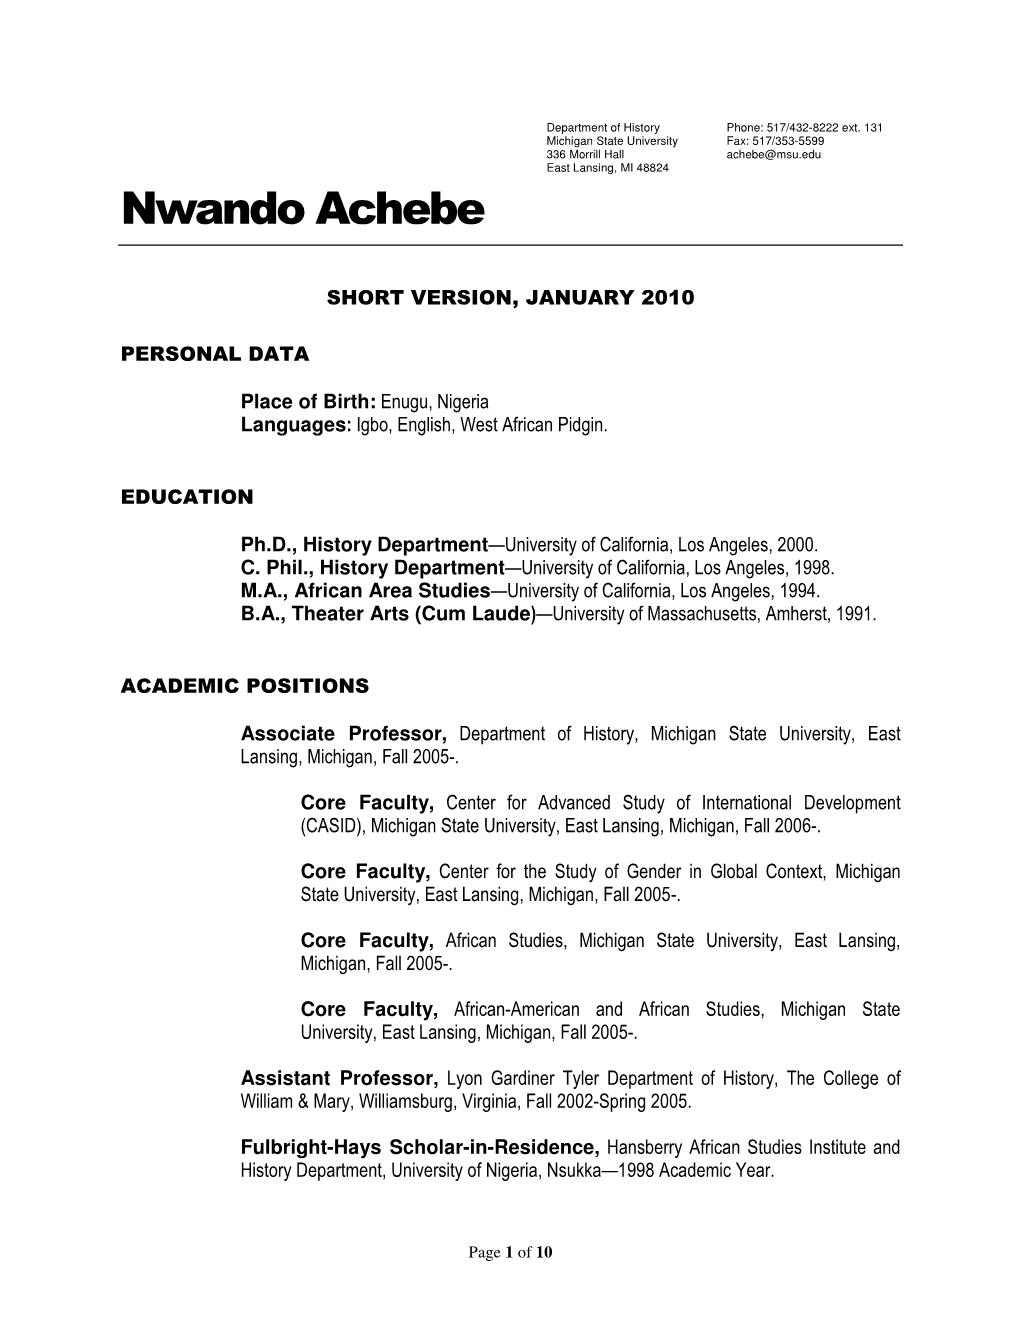 Nwando Achebe